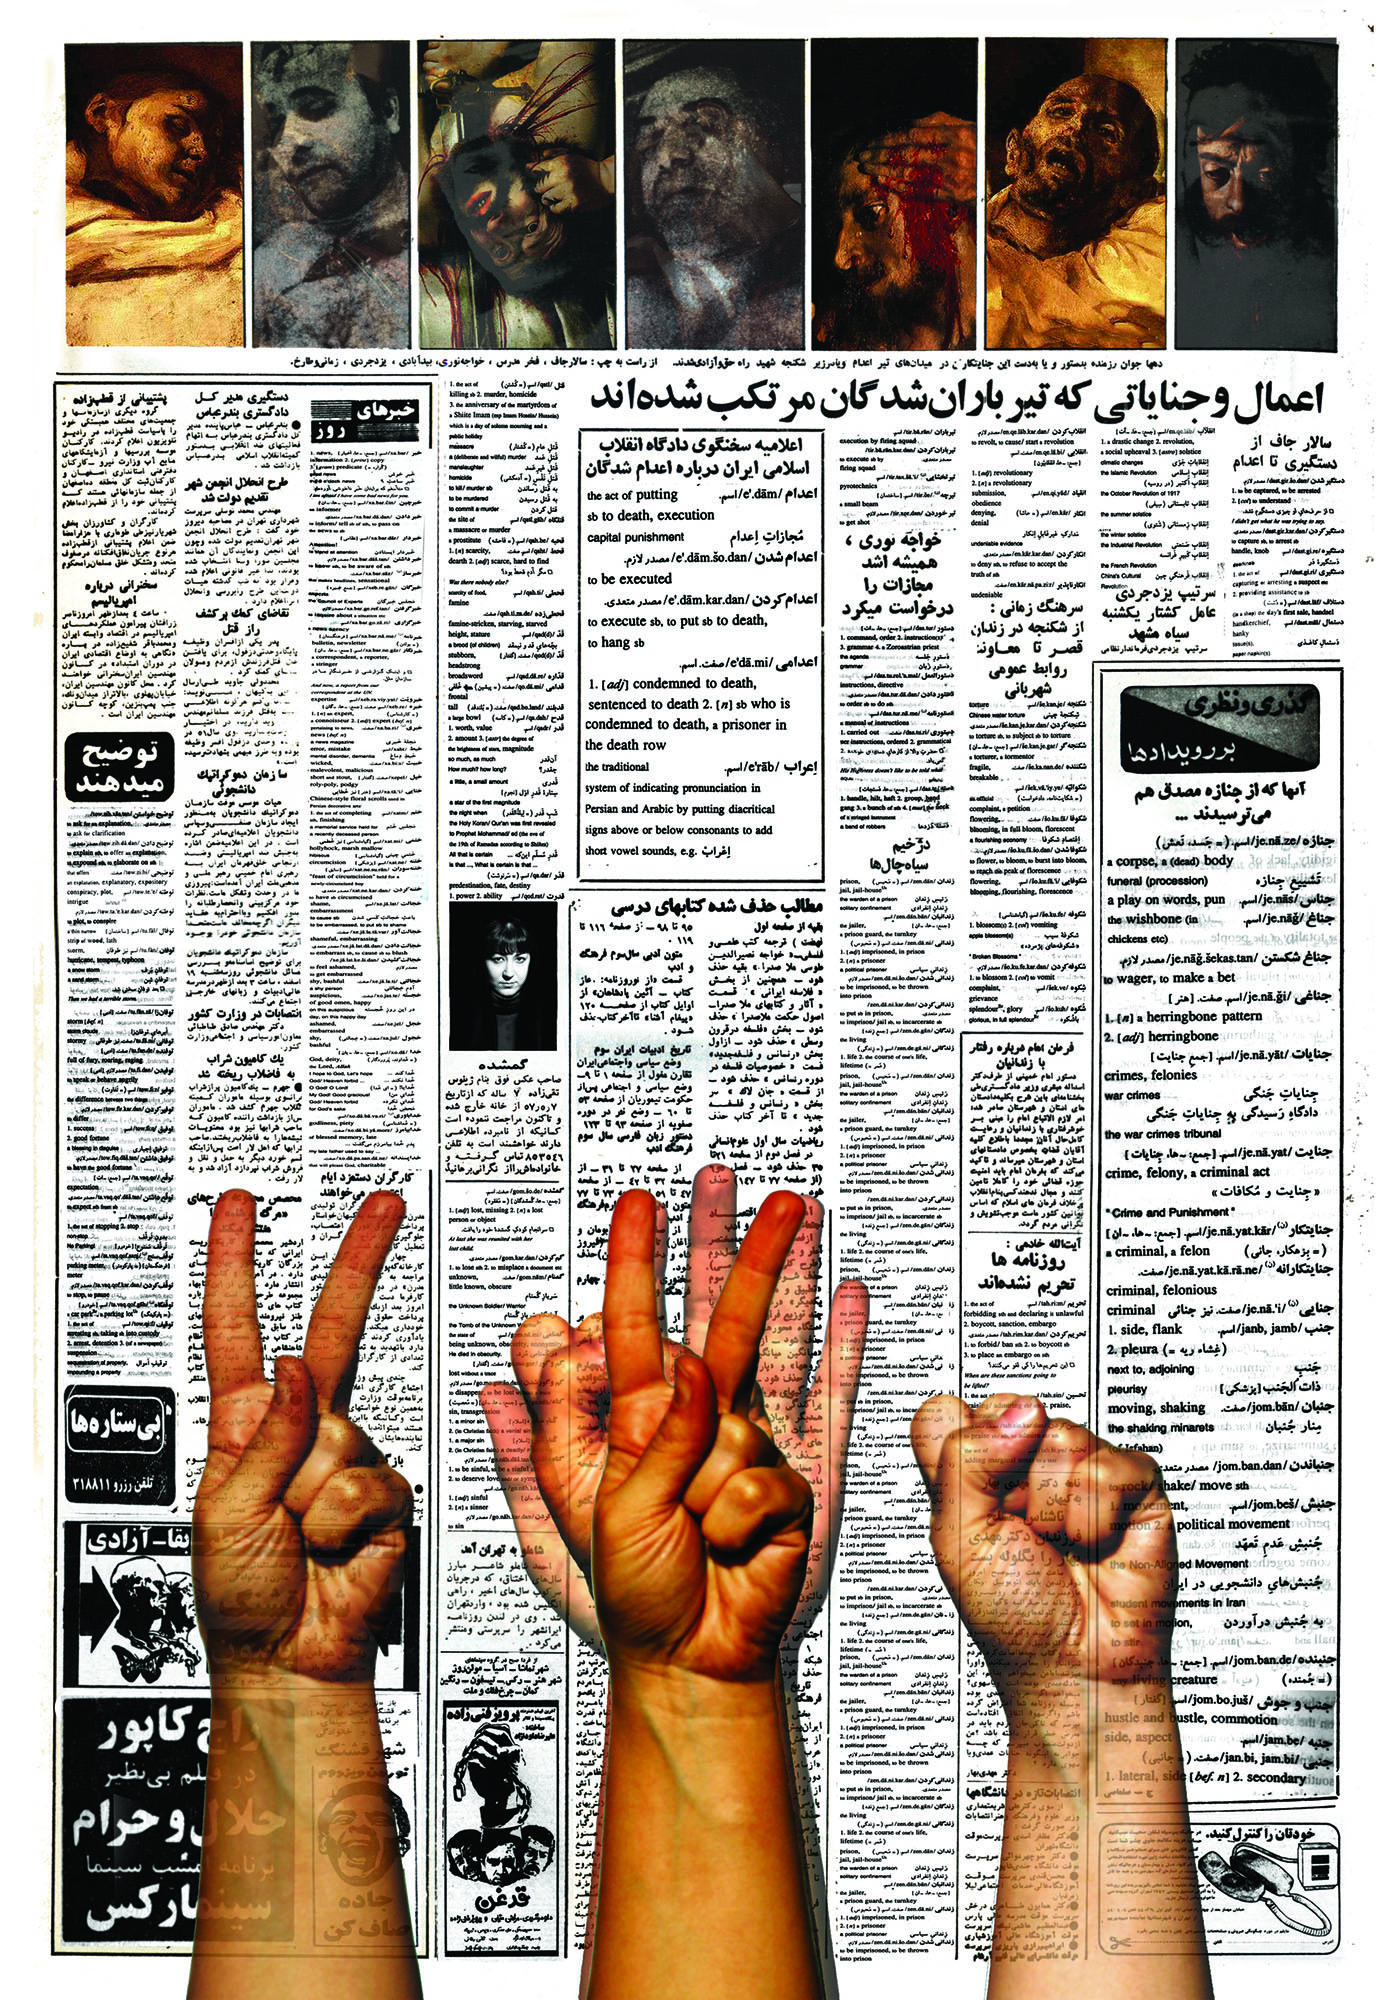 Jinoos Taghizadeh, Rock Scissors Paper, 2009. Lenticular print. Courtesy of Aaran Gallery, Tehran